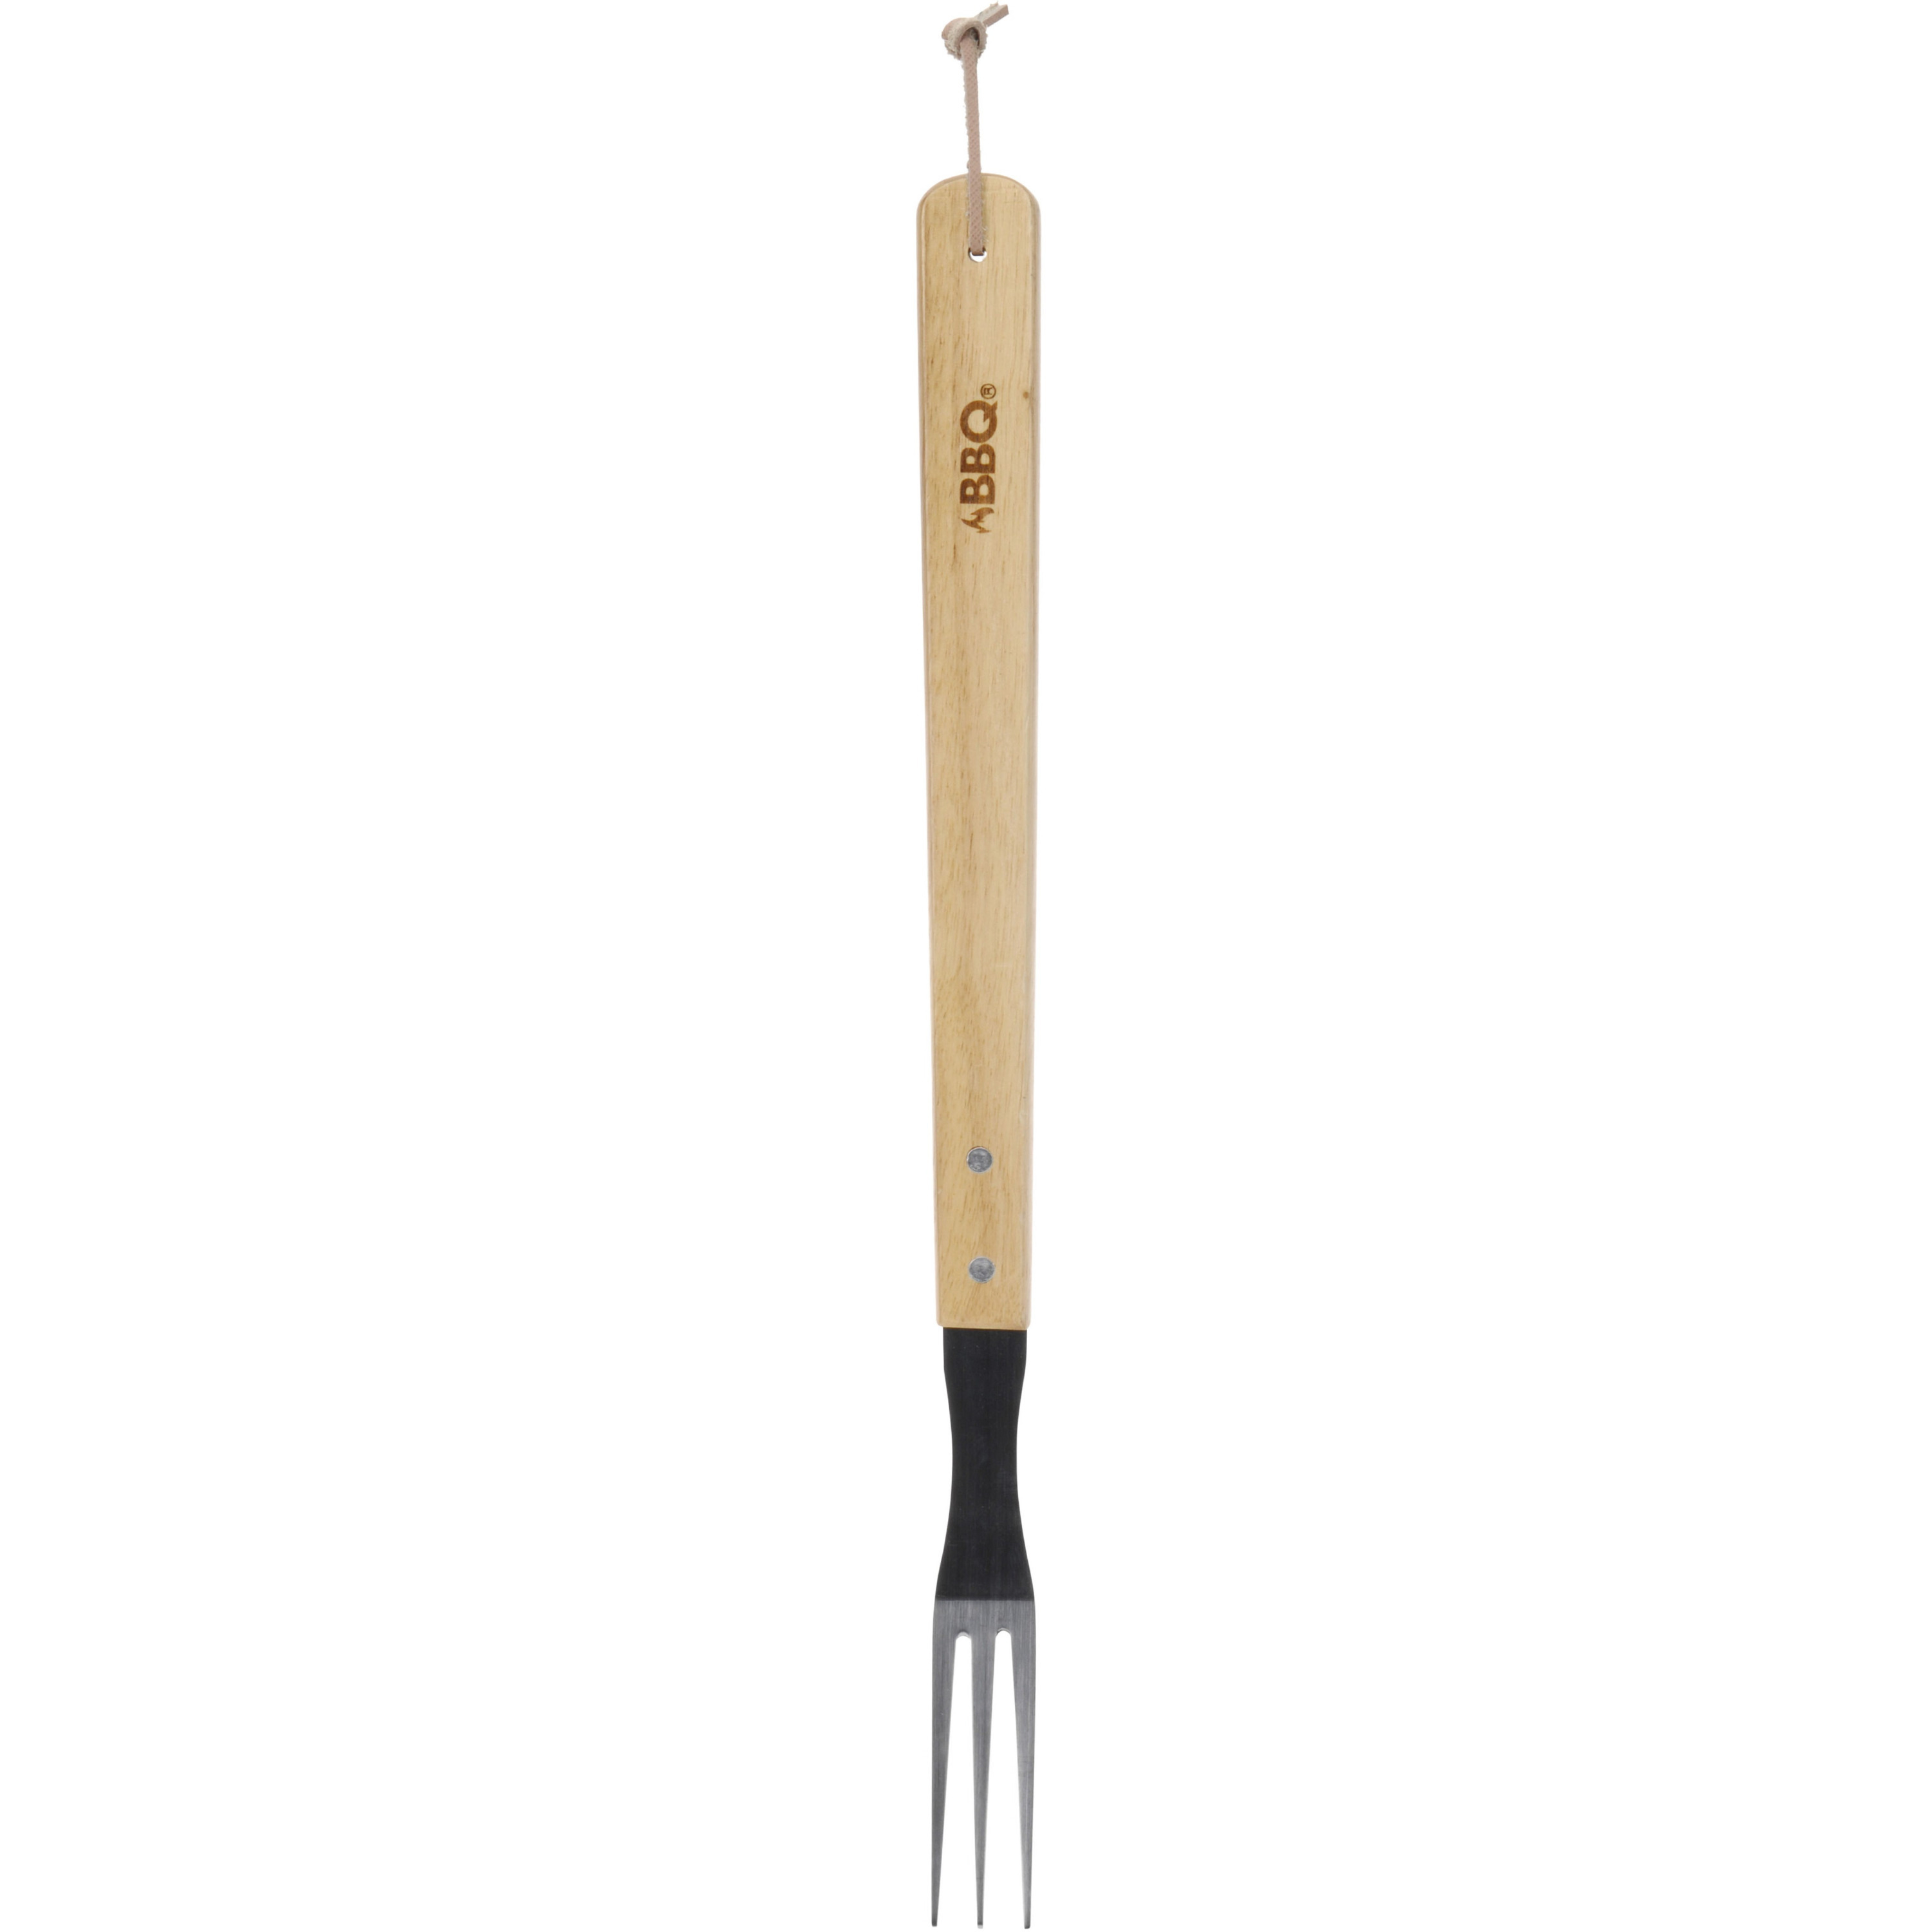 RVS BBQ-barbecue vork met houten handvat 46 cm